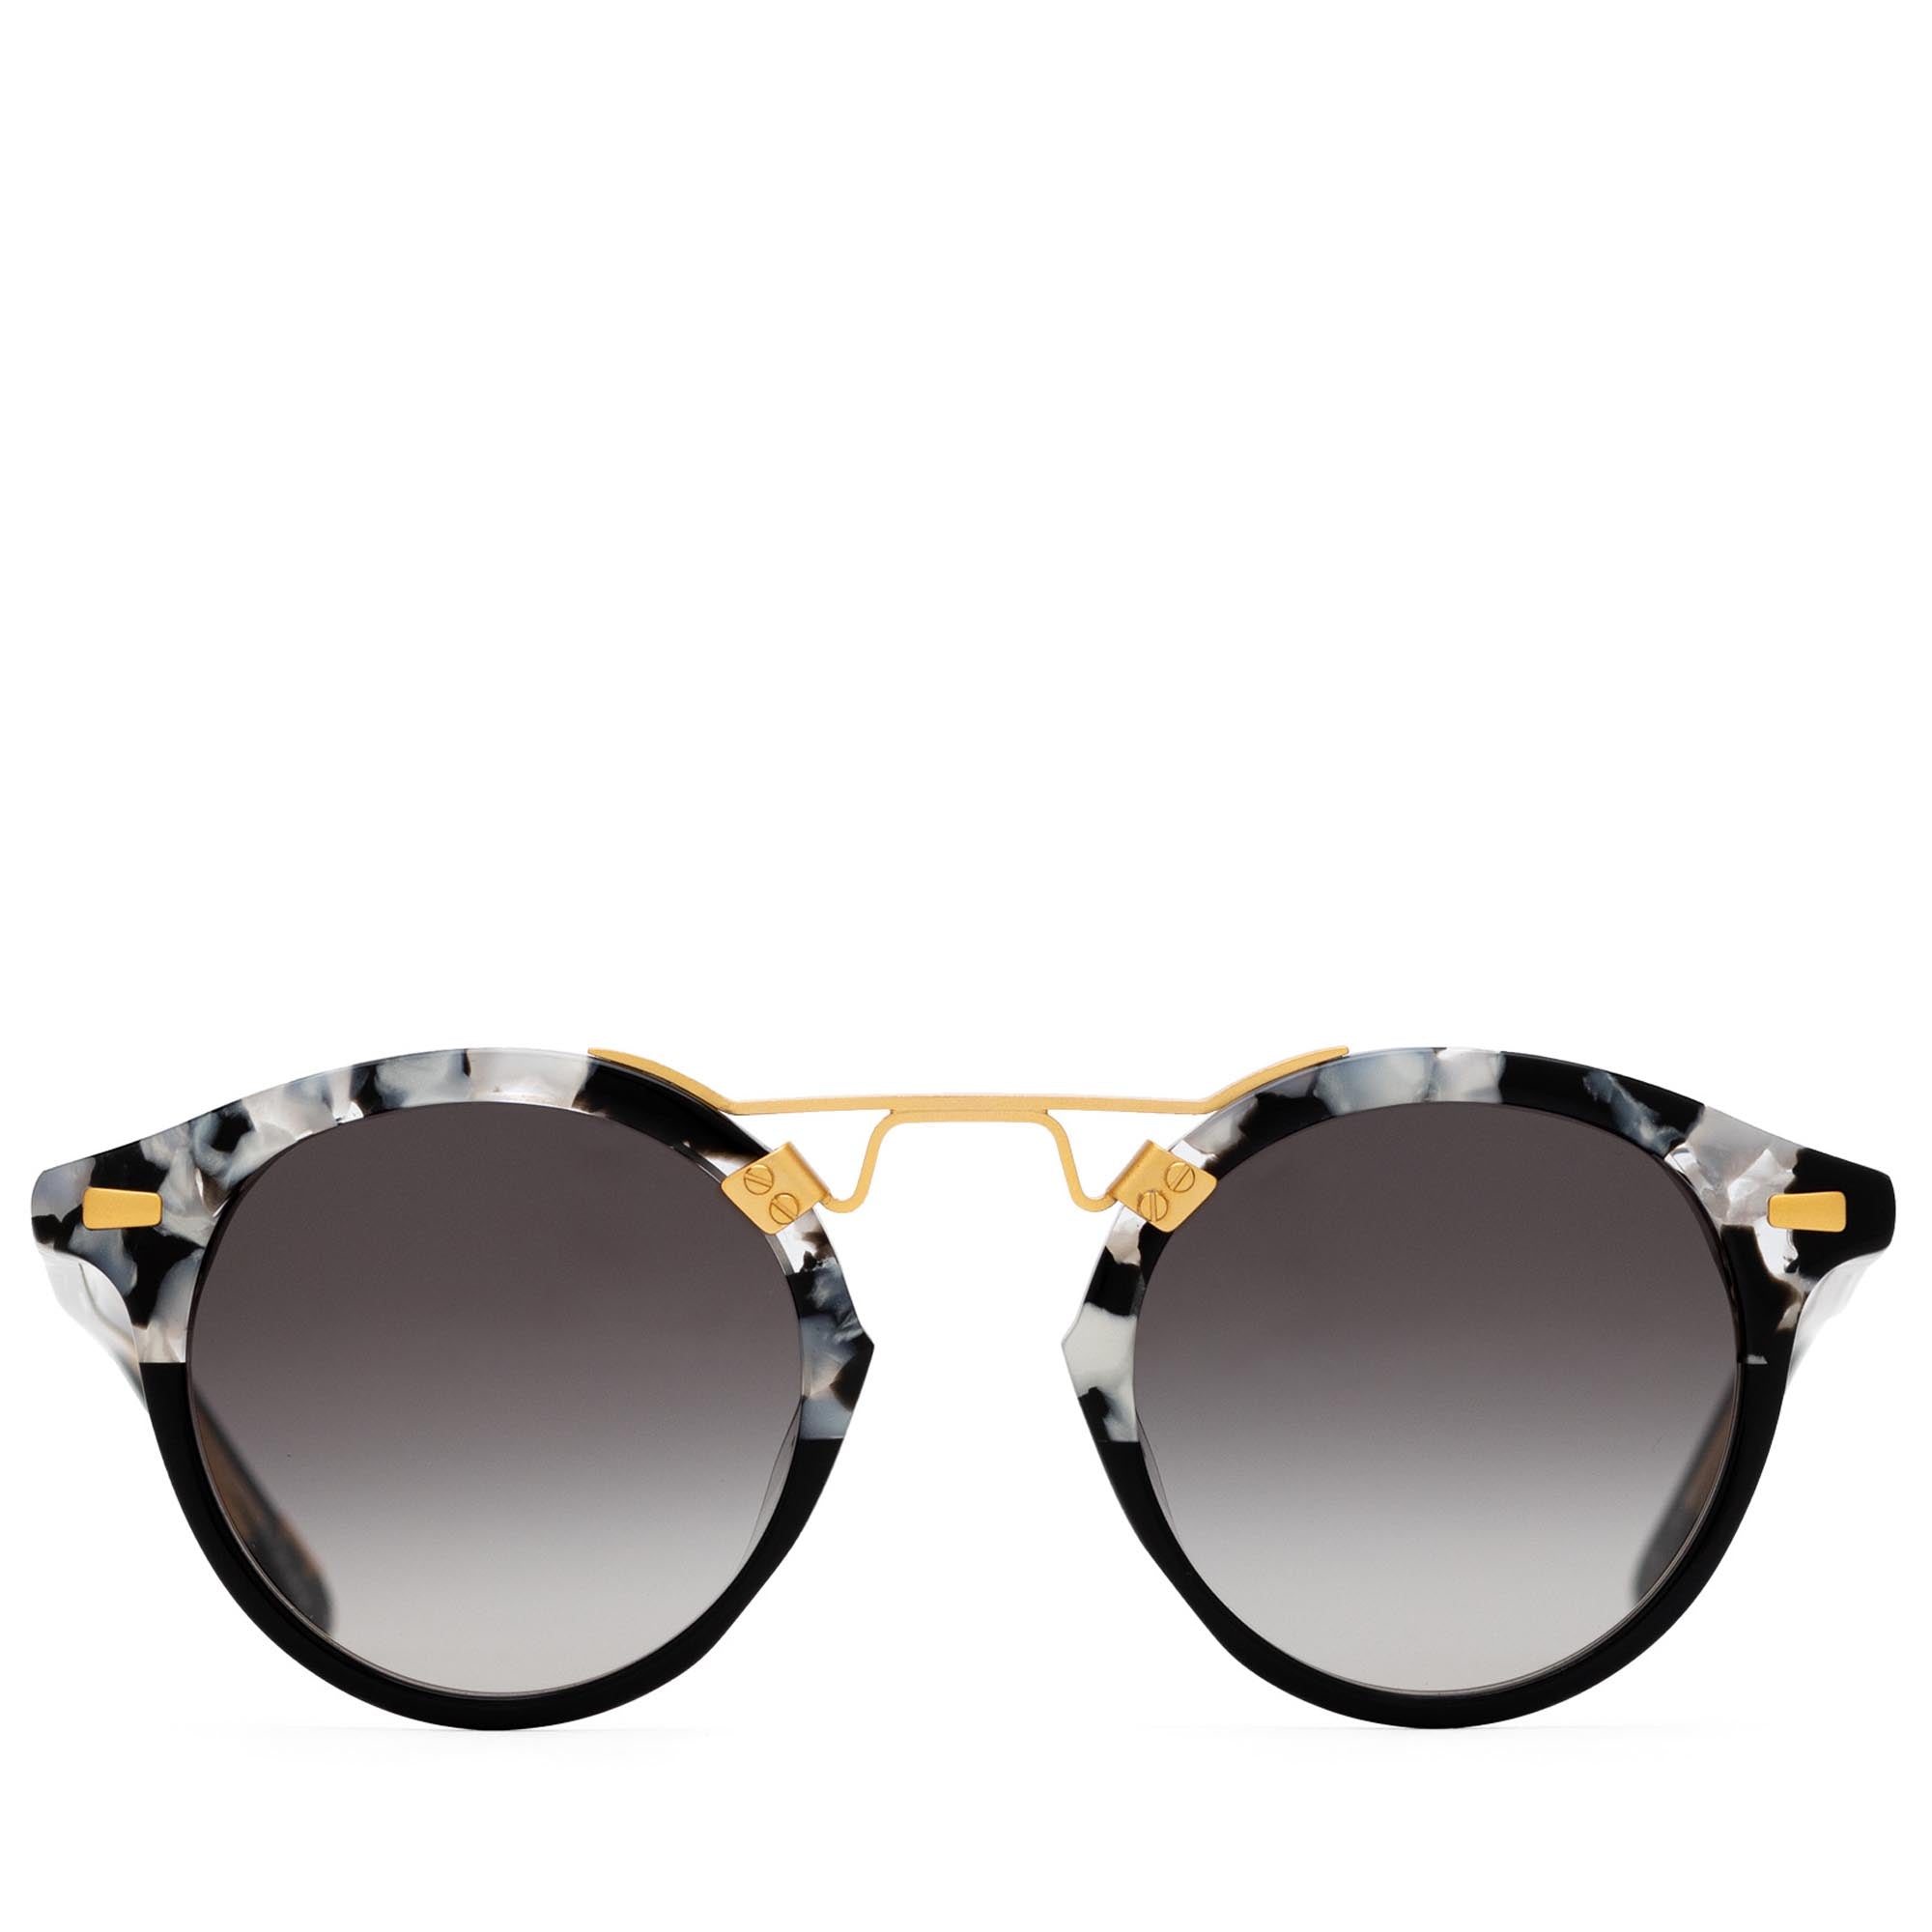 St. Louis Classic Sunglasses